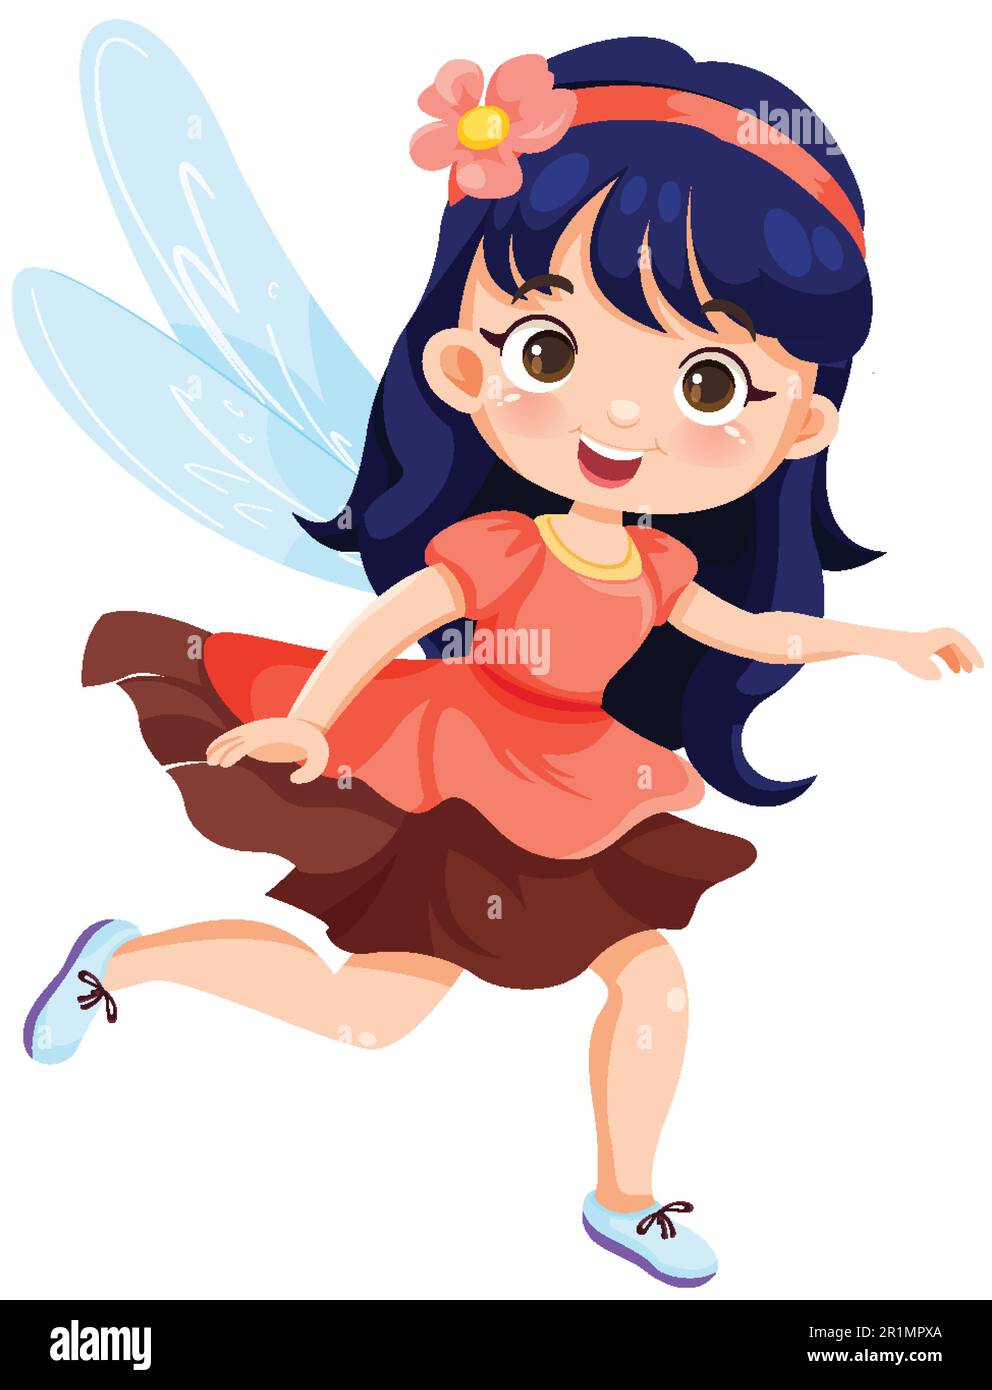 Cute Fairy Princess Cartoon Character illustration Stock Vector ...